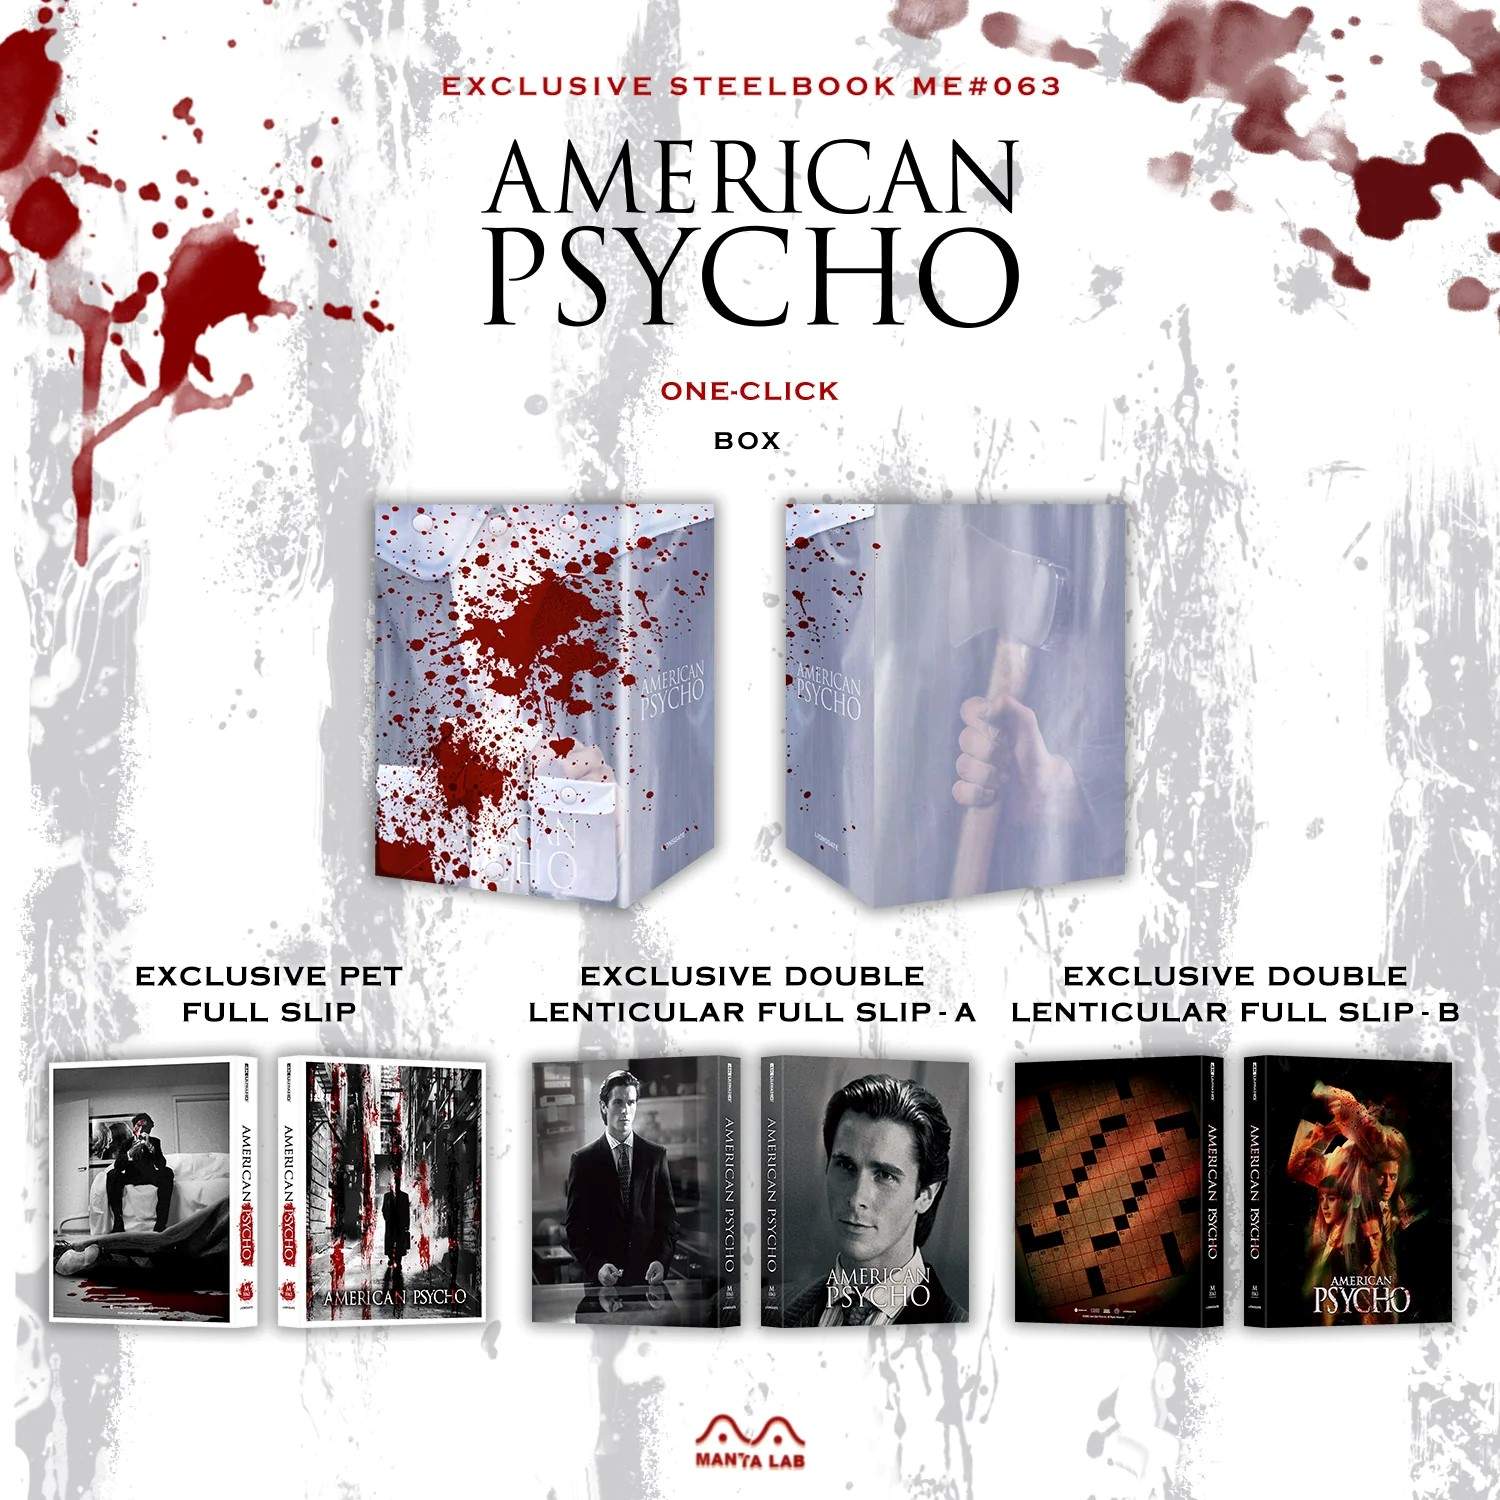 American Psycho SteelBook Box Contents